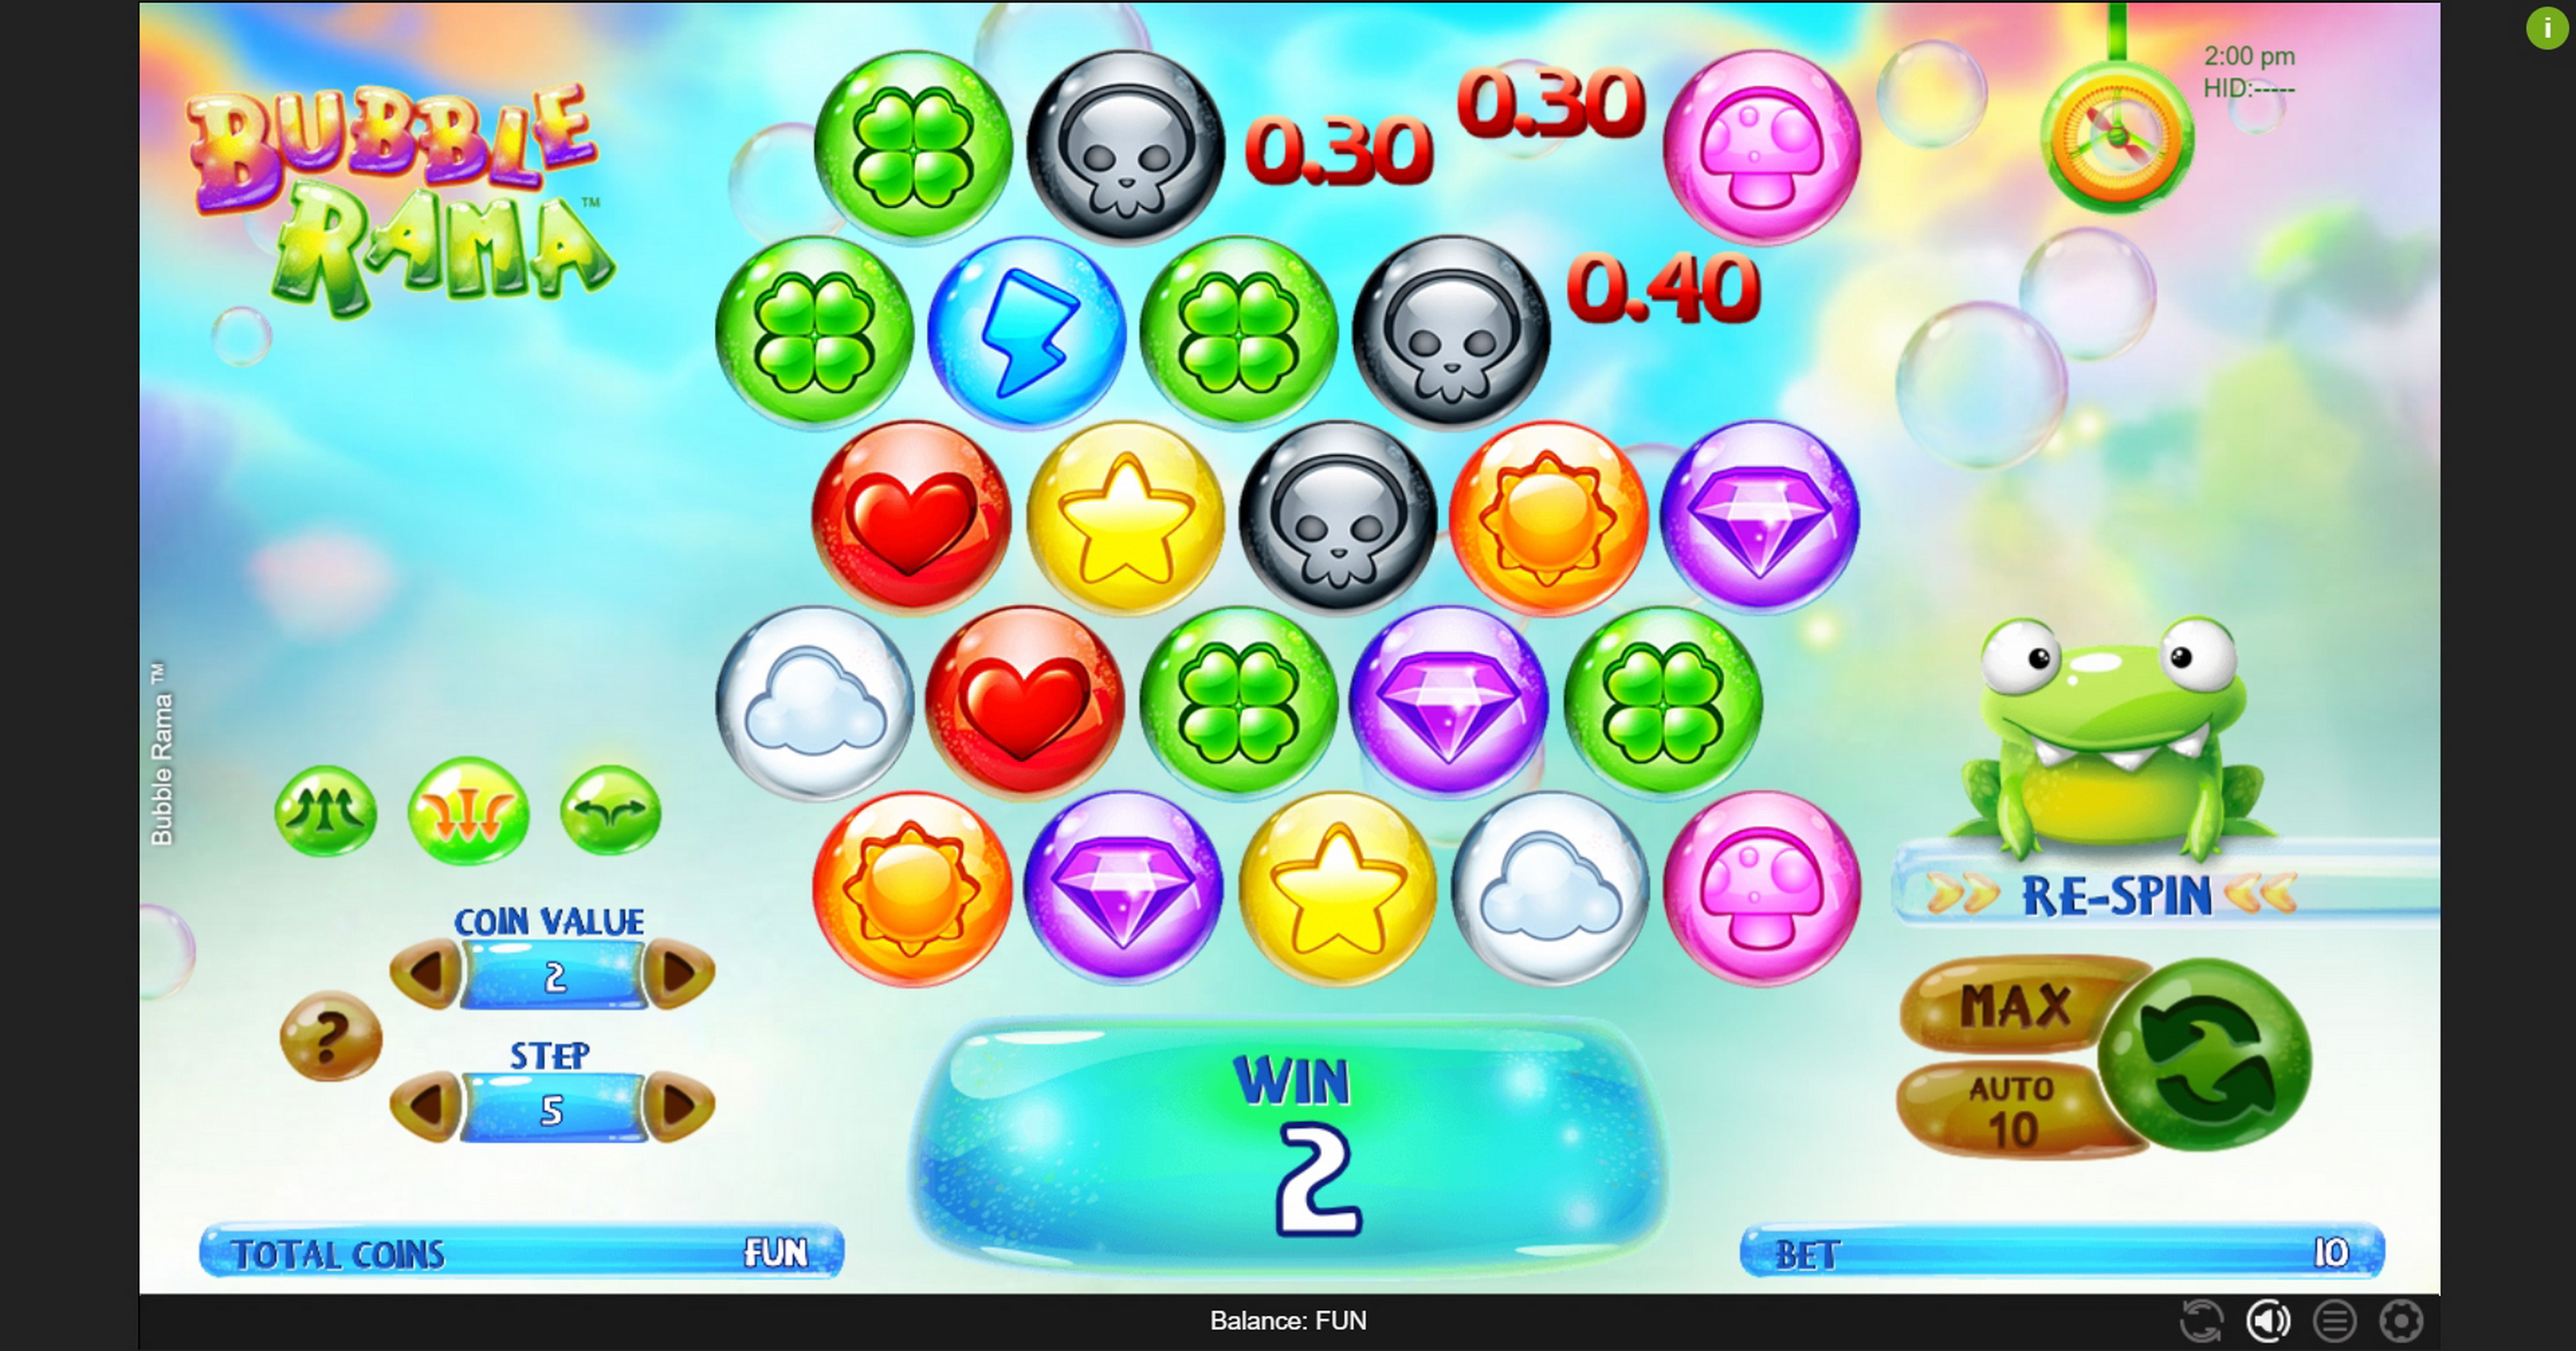 Win Money in Bubble Rama Free Slot Game by Espresso Games